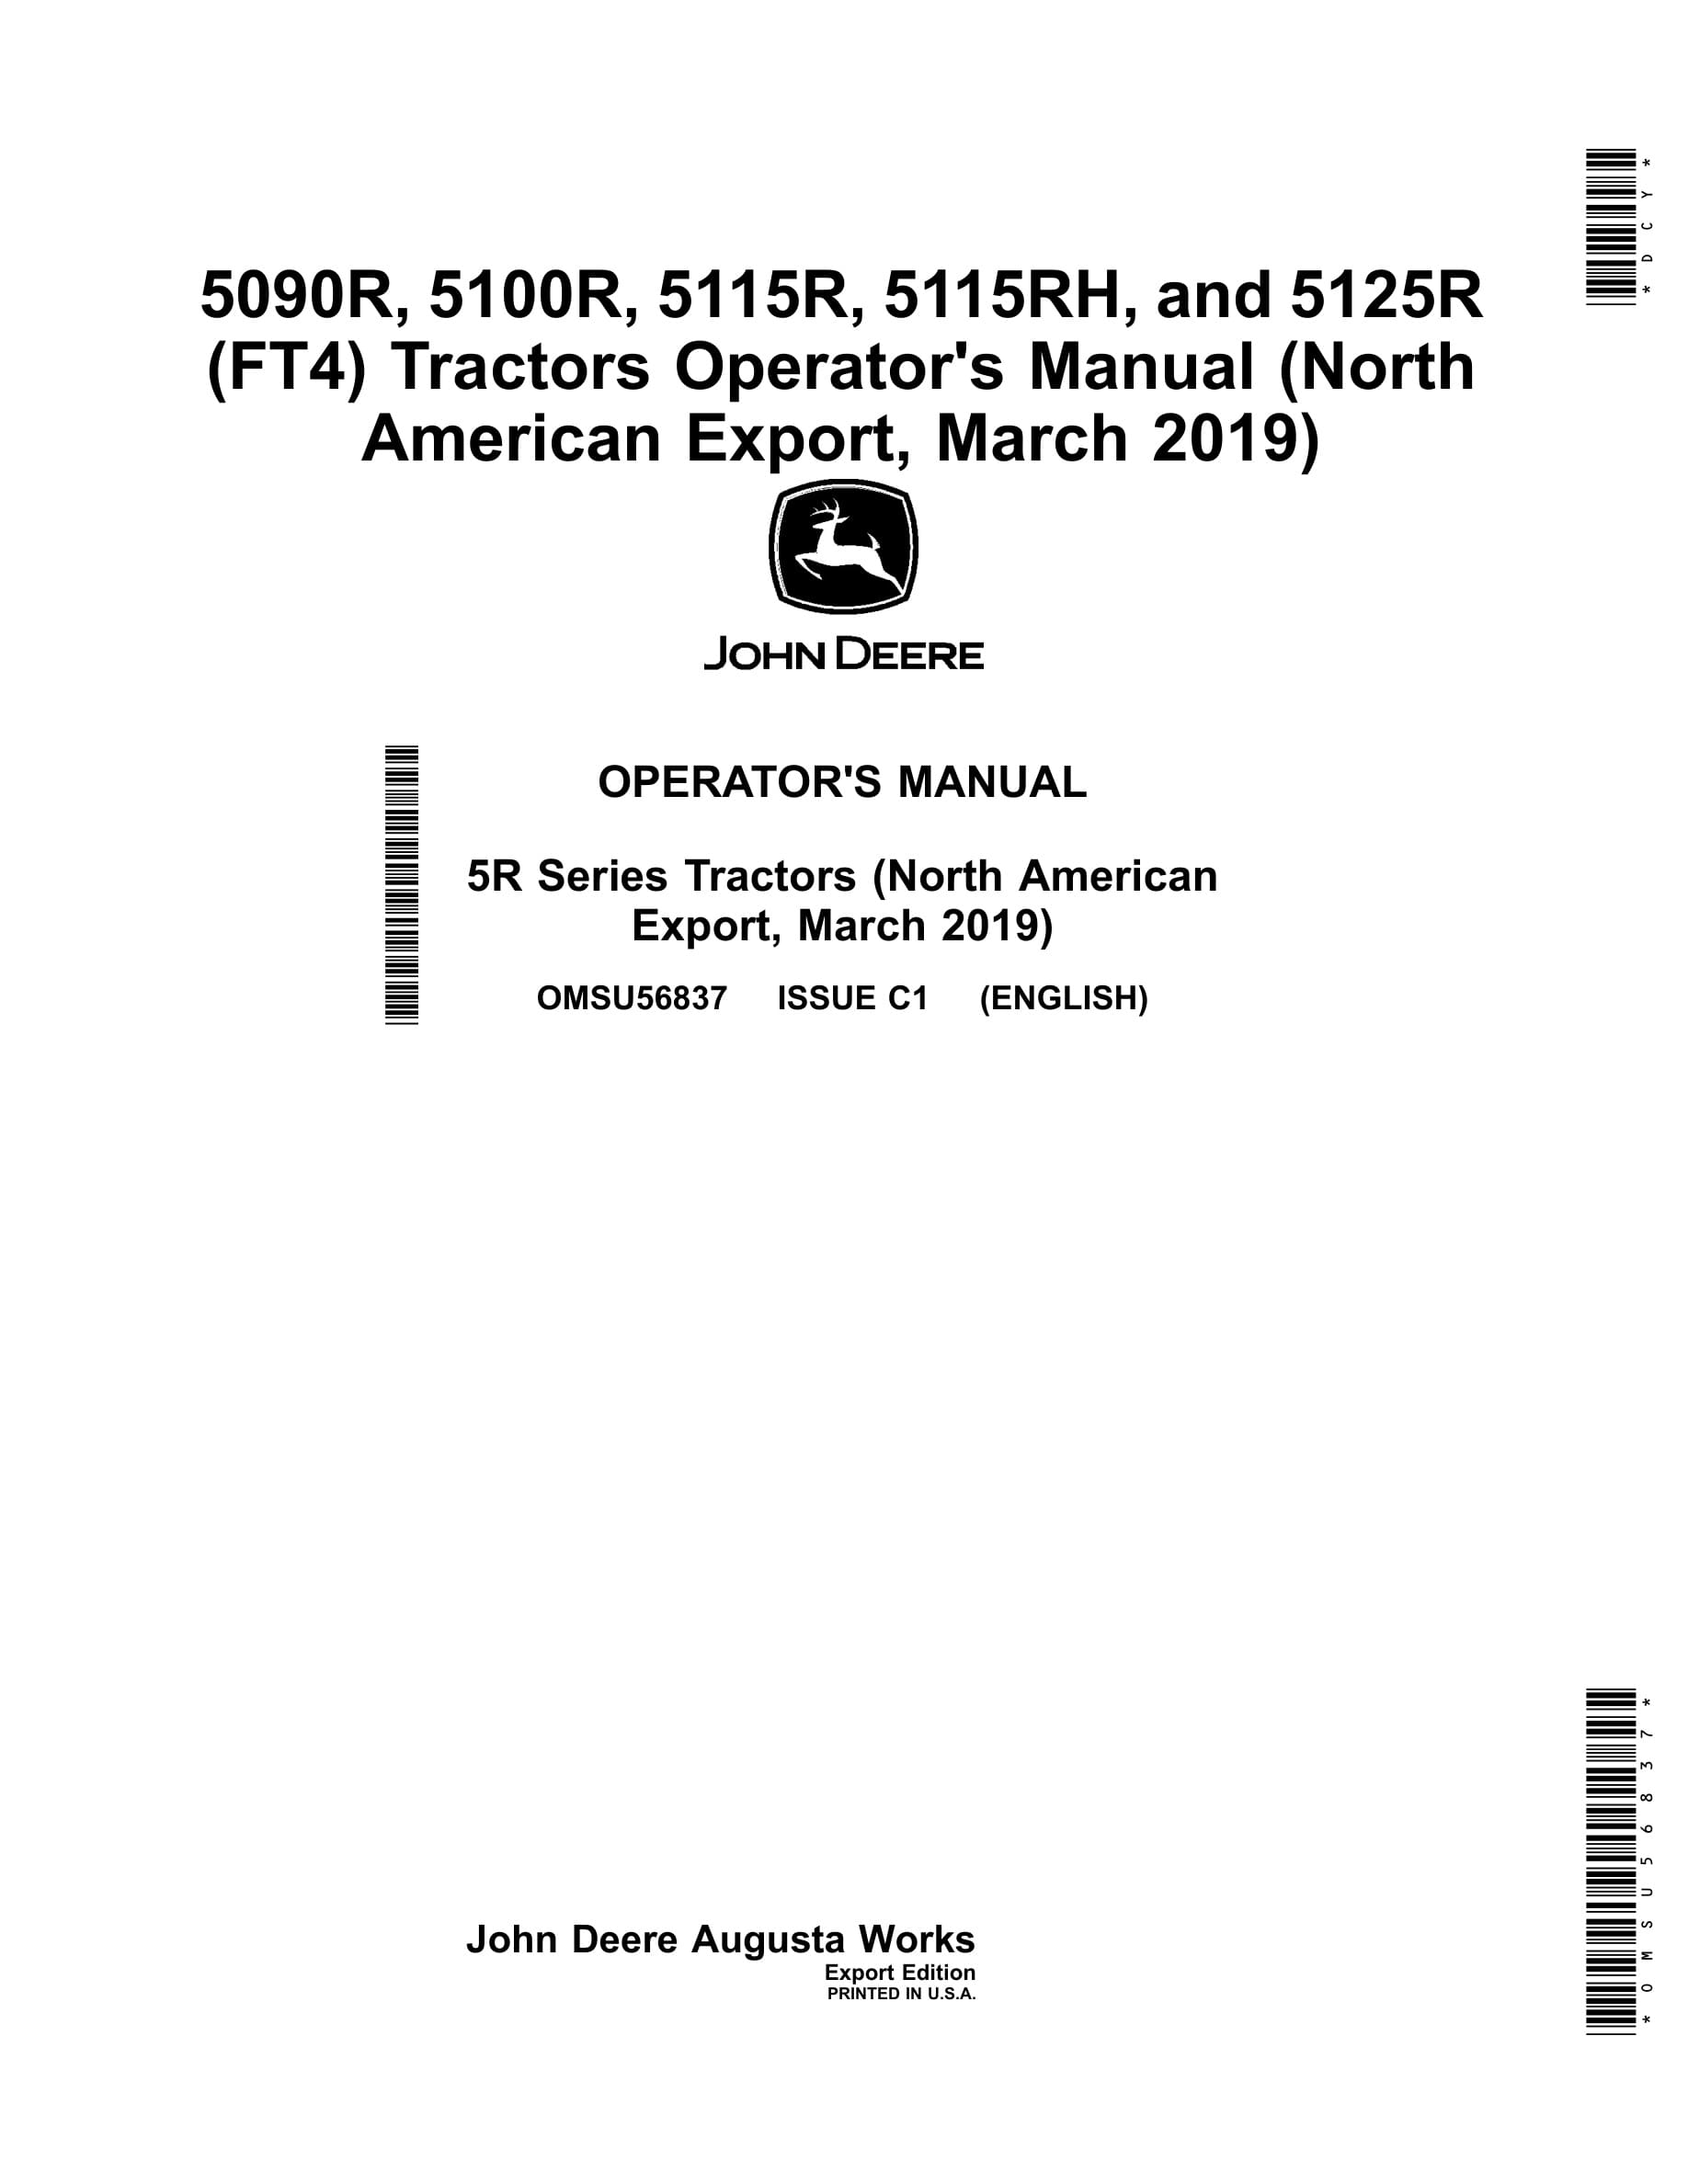 John Deere 5090r, 5100r, 5115r, 5115rh, And 5125r (ft4) Tractors Operator Manuals OMSU56837-1